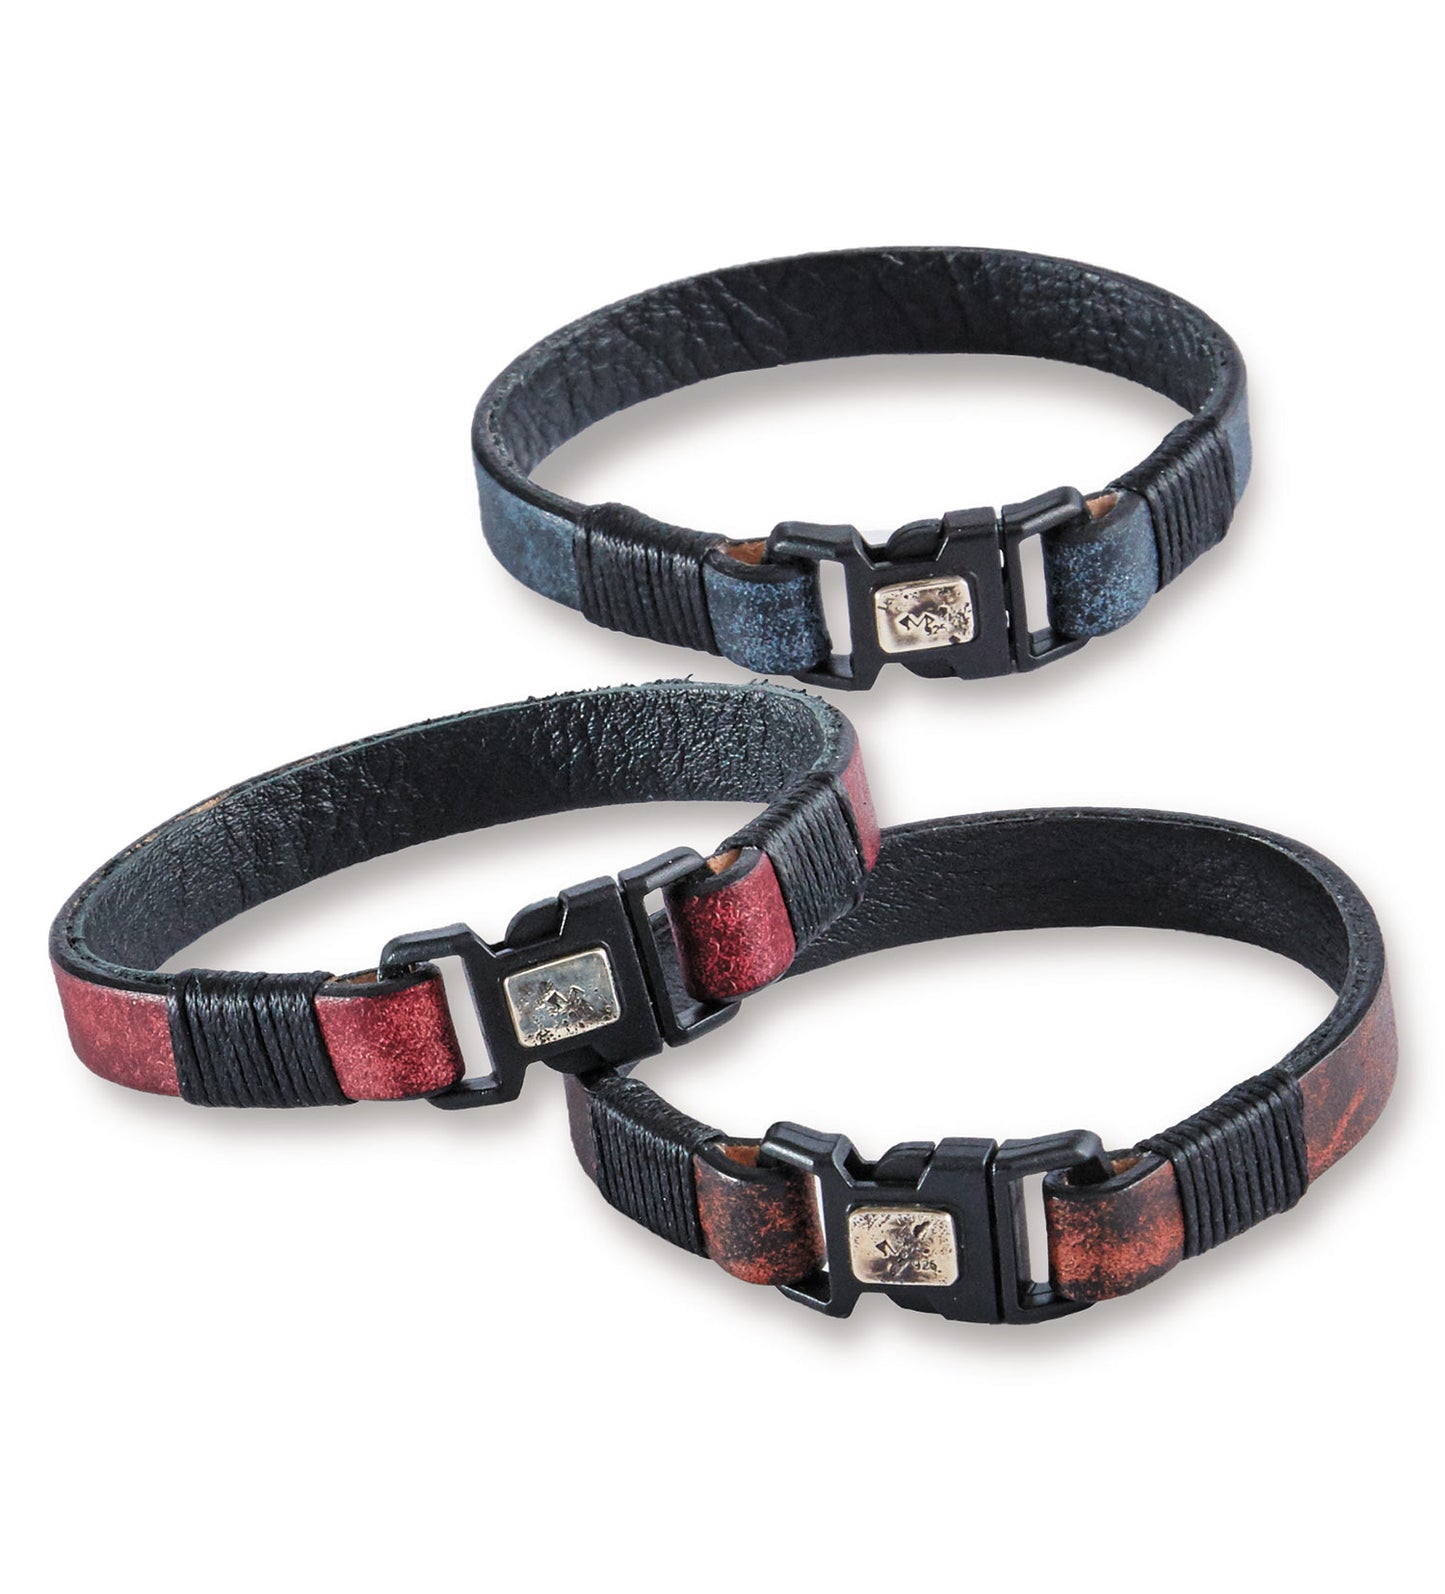 Kenton Michael Rustic Leather Bracelet